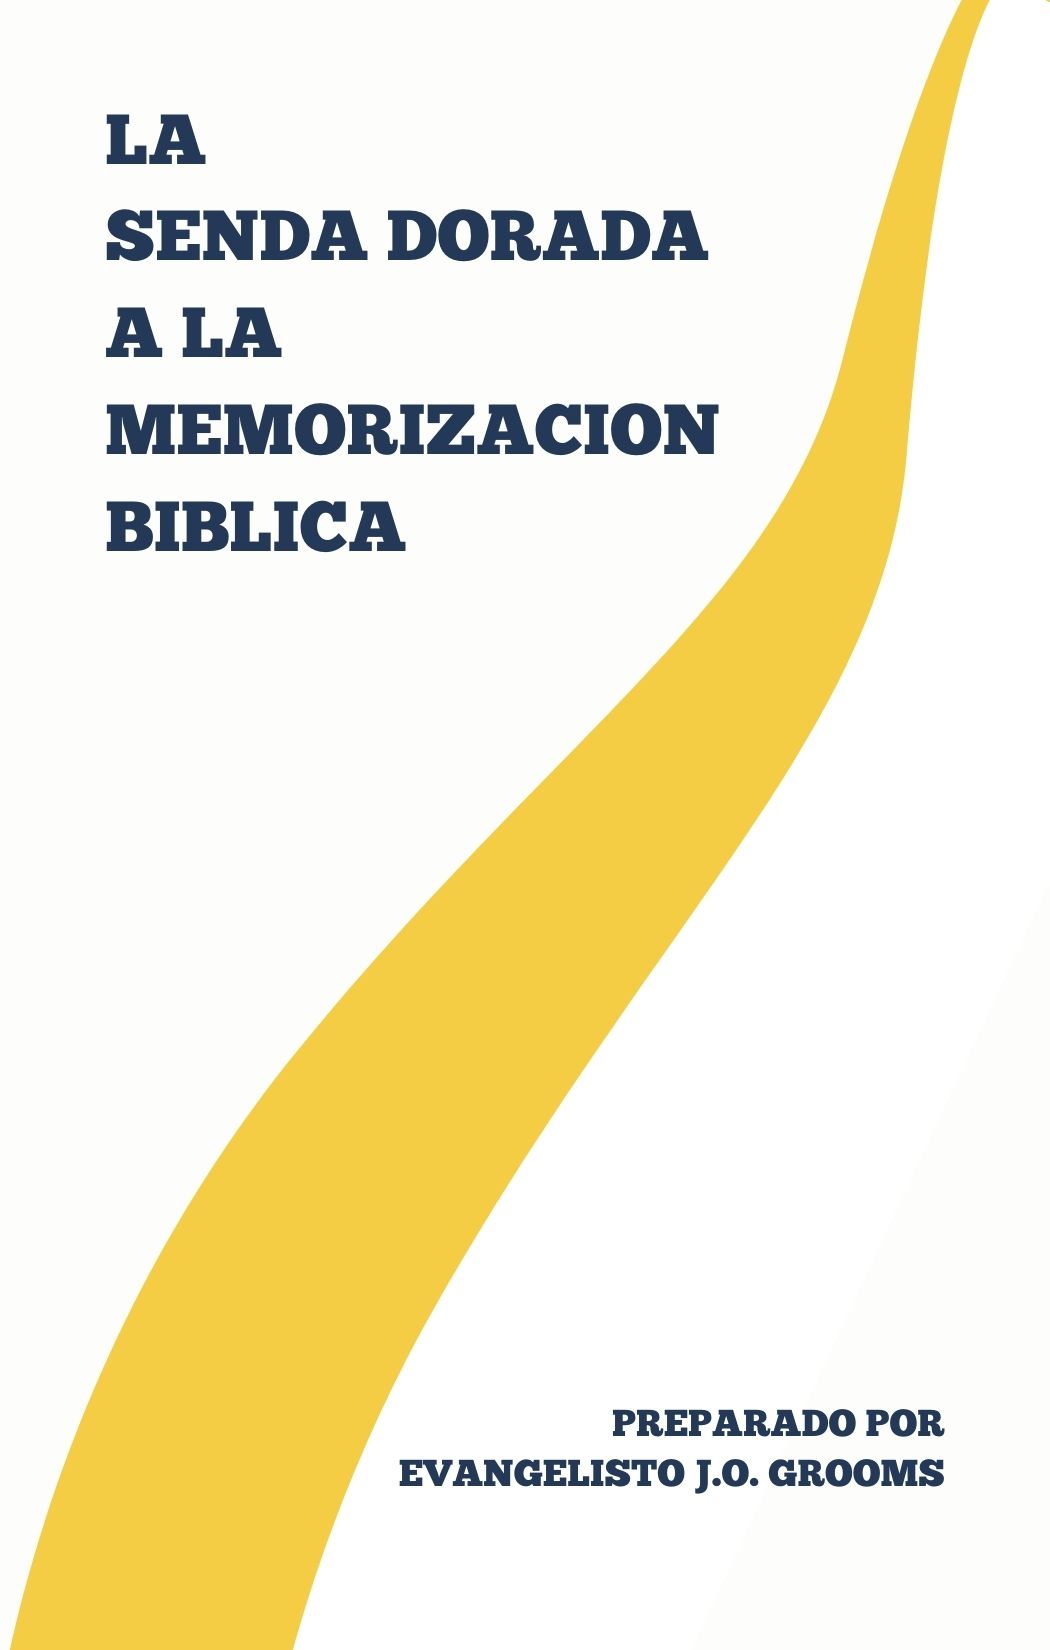 La Senda Dorada A La Memorizacion Biblica cover image